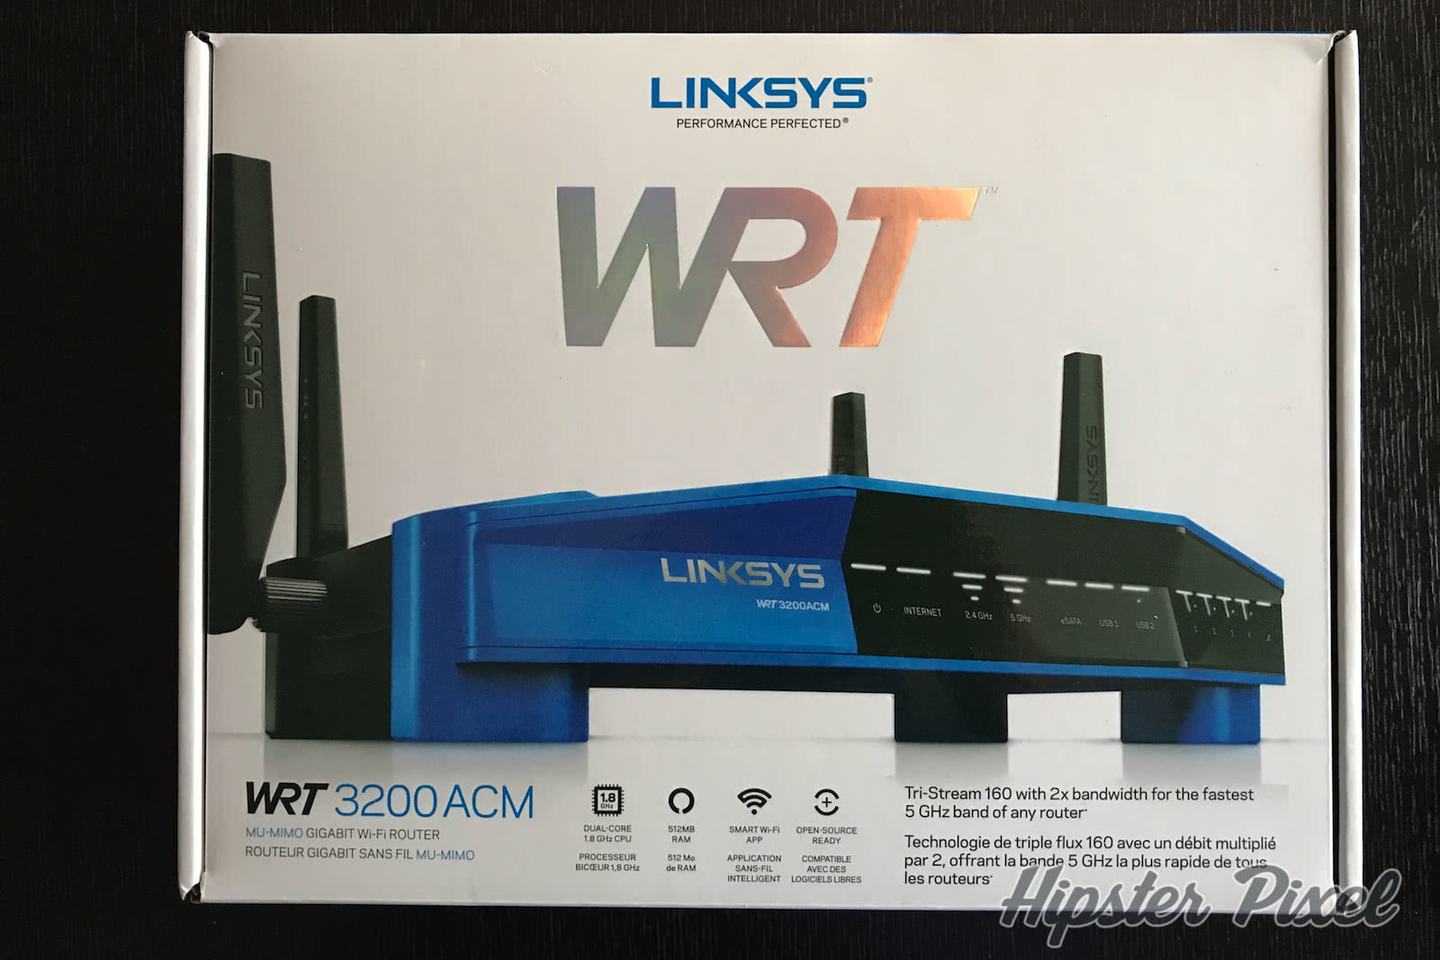 Linksys WRT3200ACM AC3200 MU-MIMO Gigabit Wi-Fi Router Review